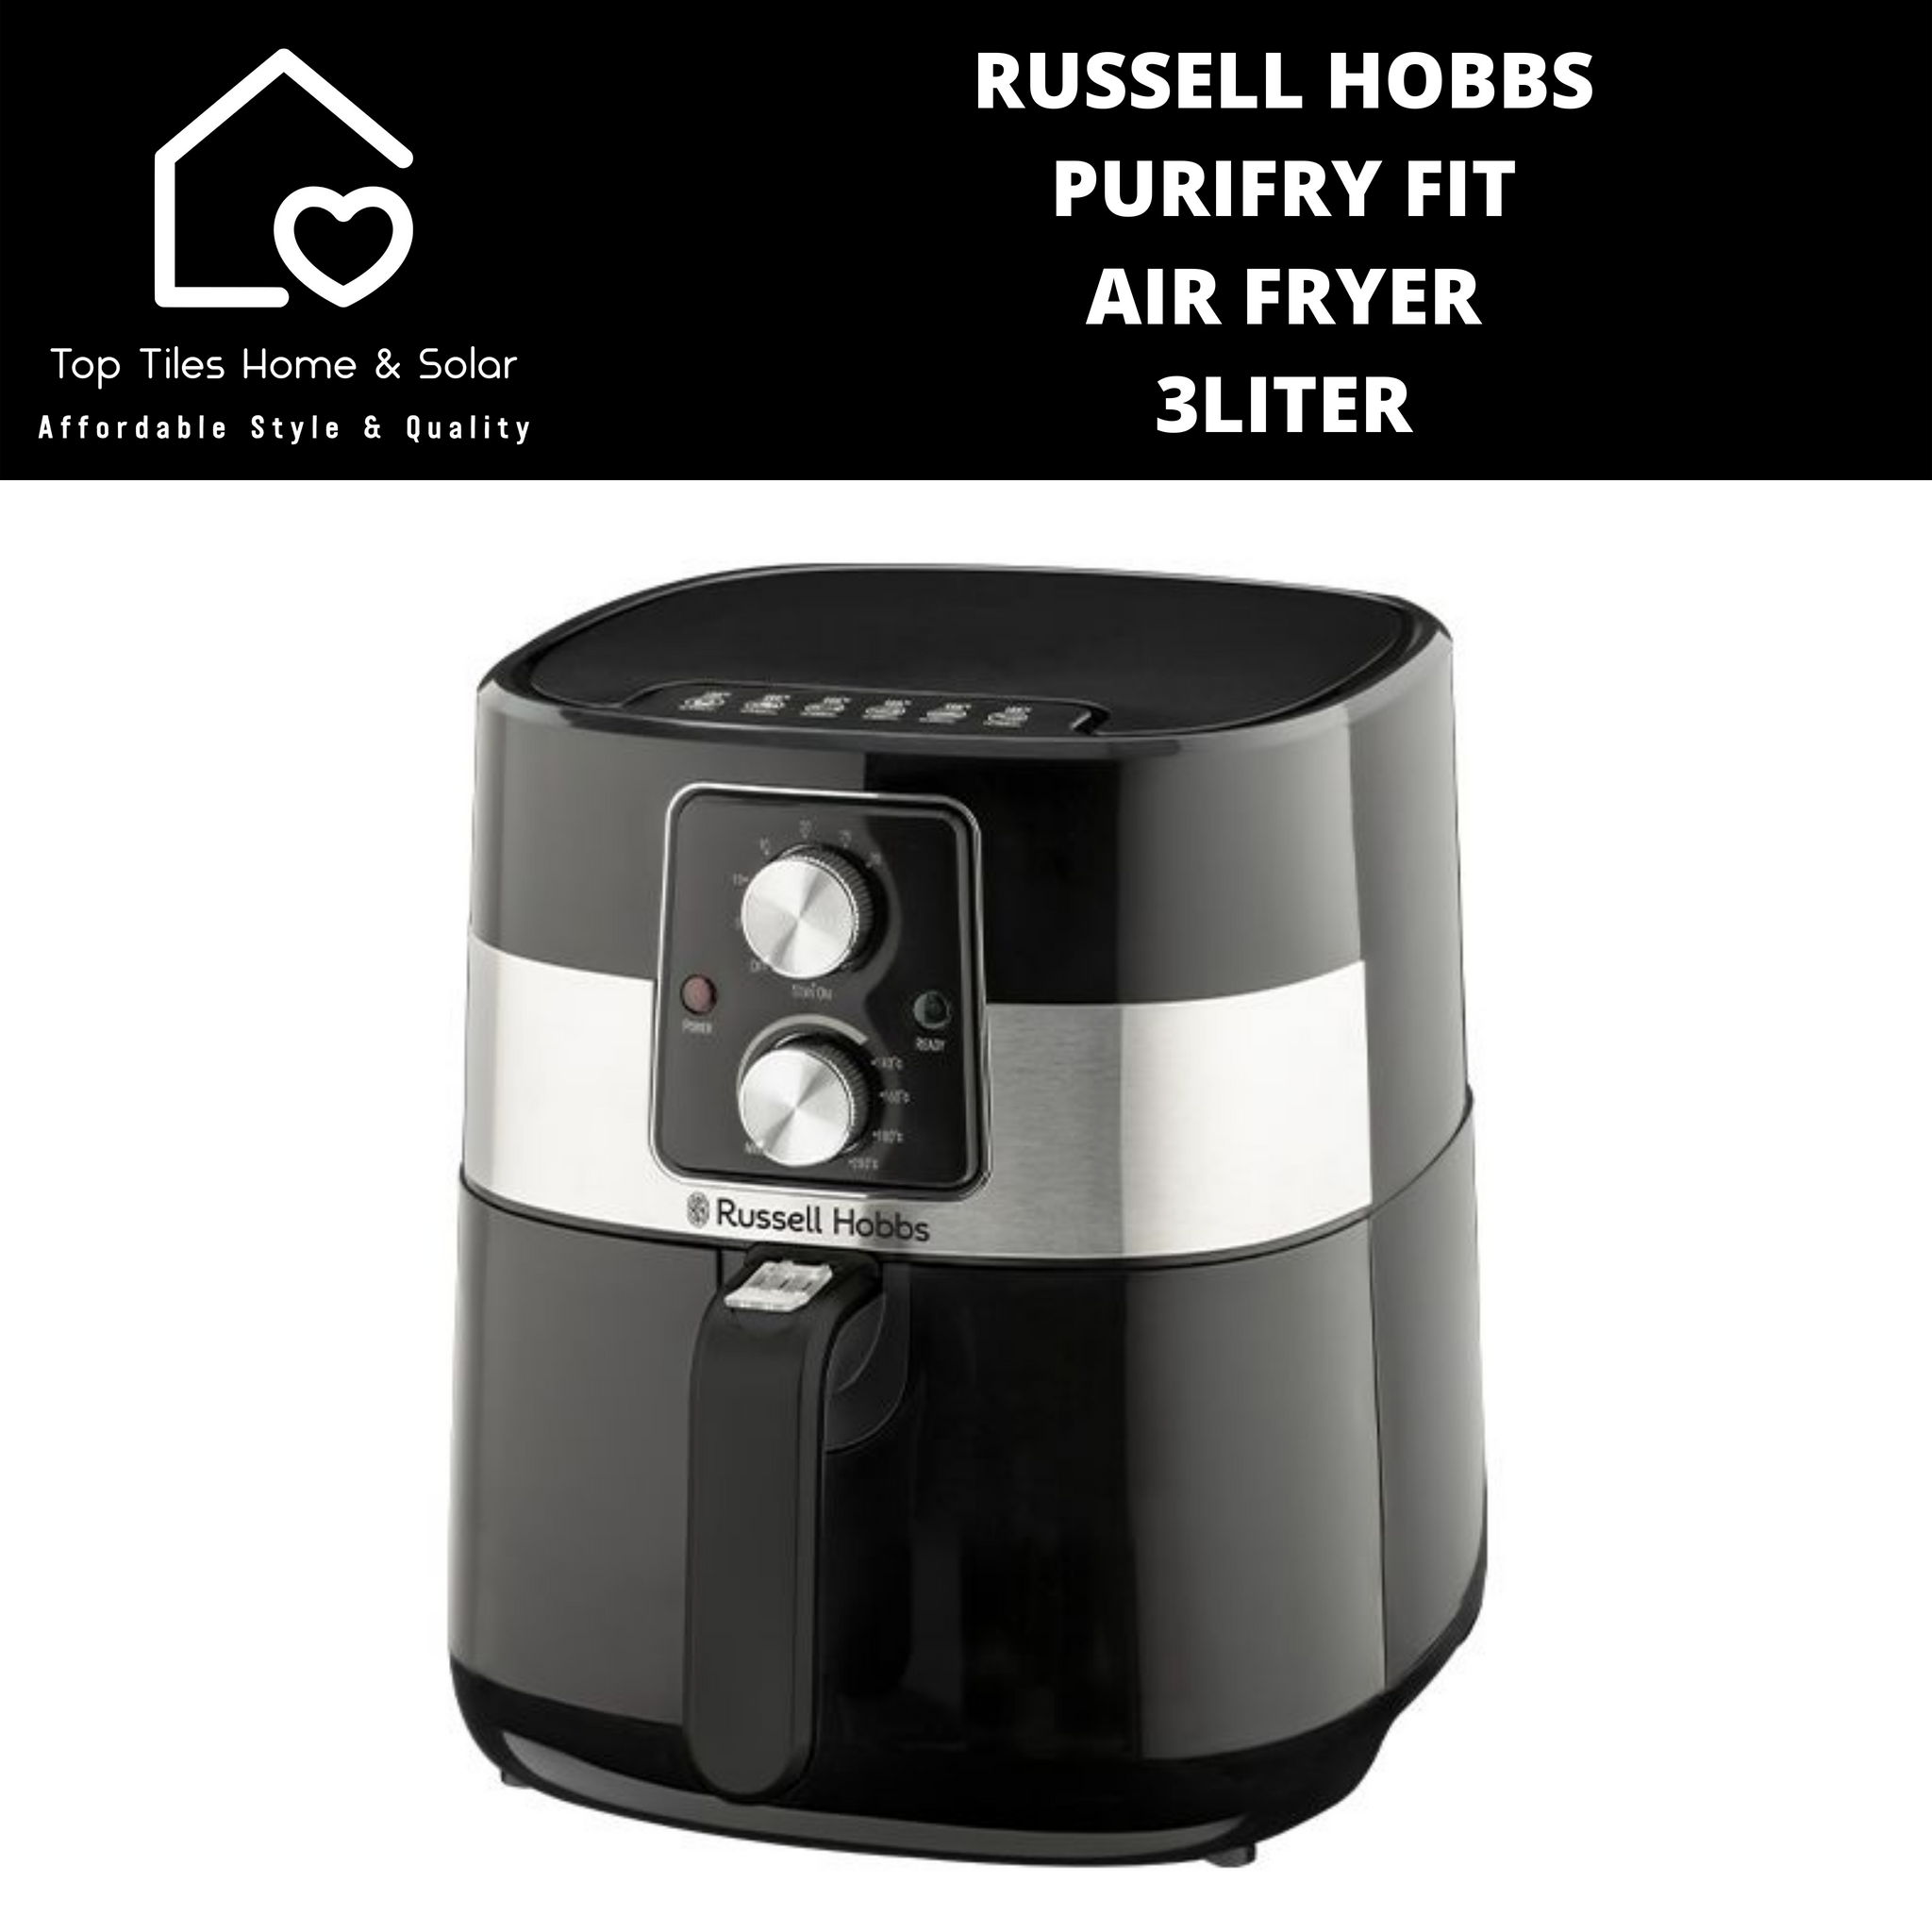 Russell Hobbs Purifry Fit Air Fryer - 3Liter – Top Tiles Home & Solar